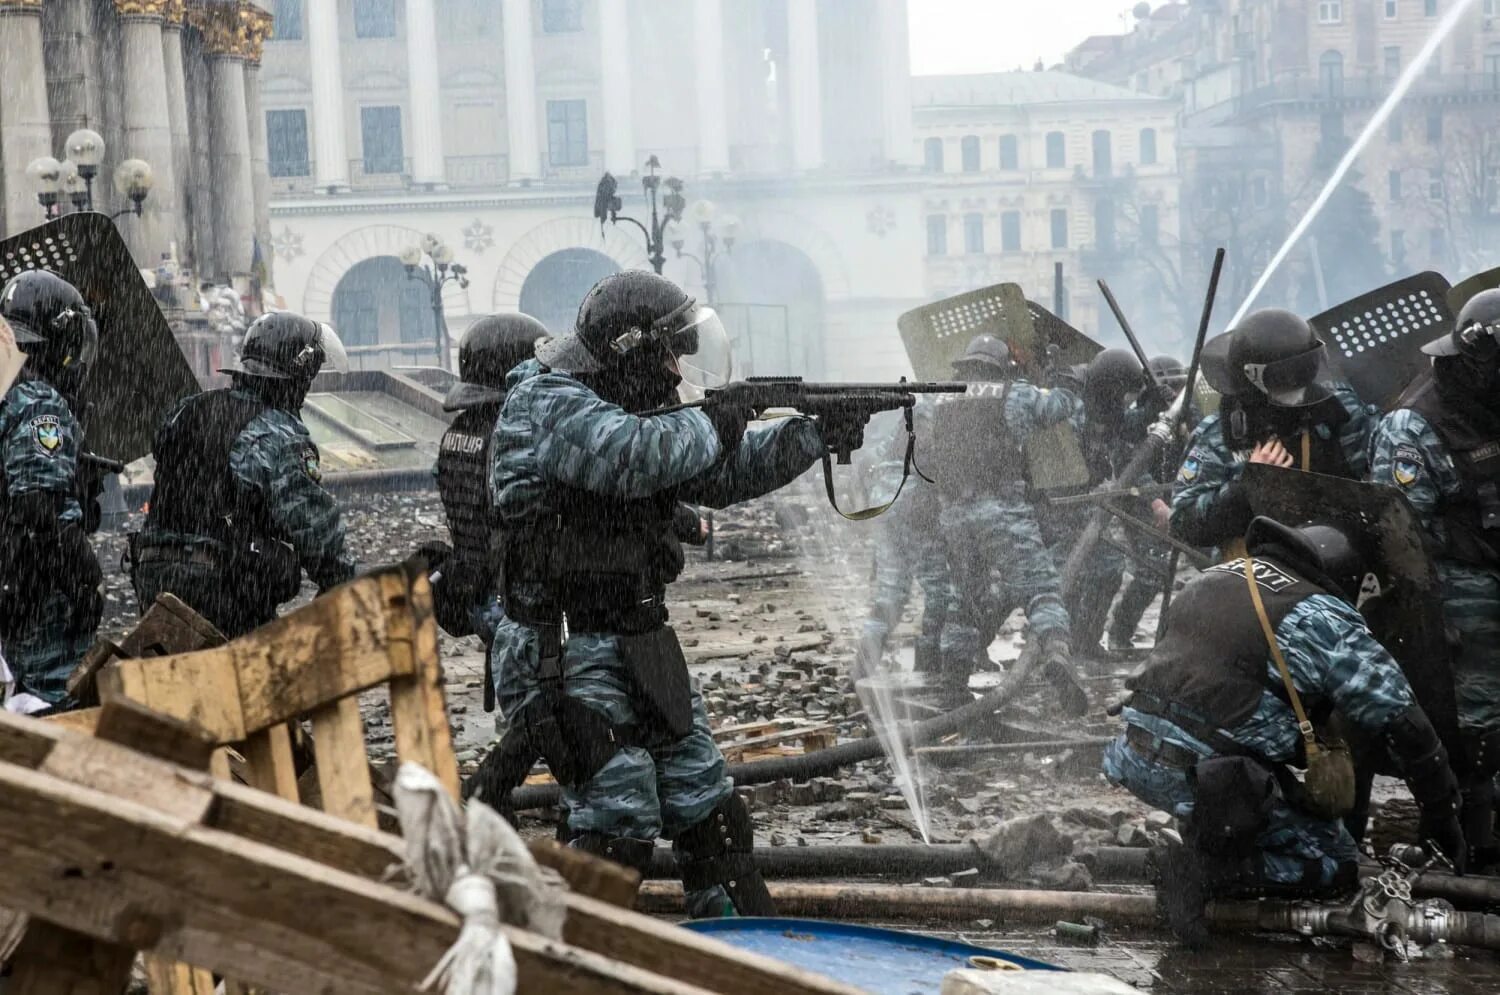 Евромайдан на Украине в 2014 Беркут. Беркутовцы на майдане